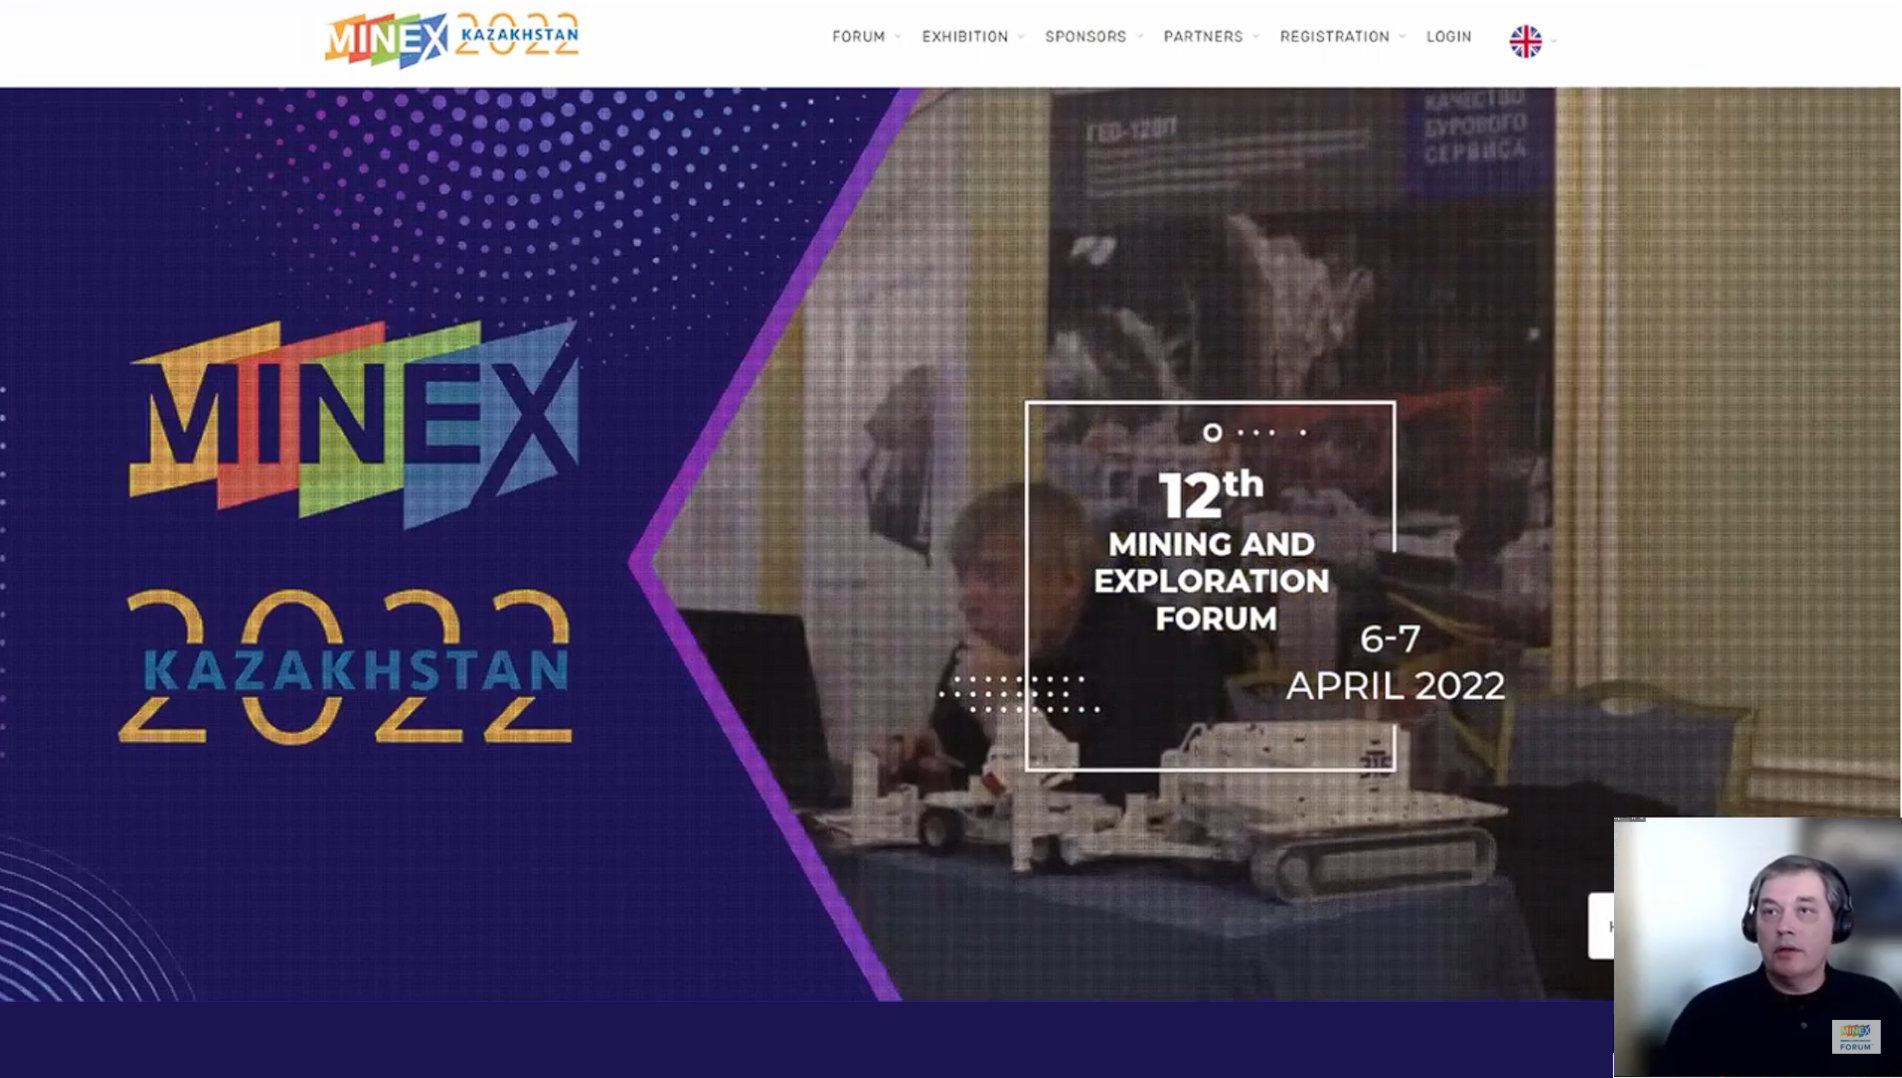 Online presentation of the MINEX Kazakhstan 2022 forum